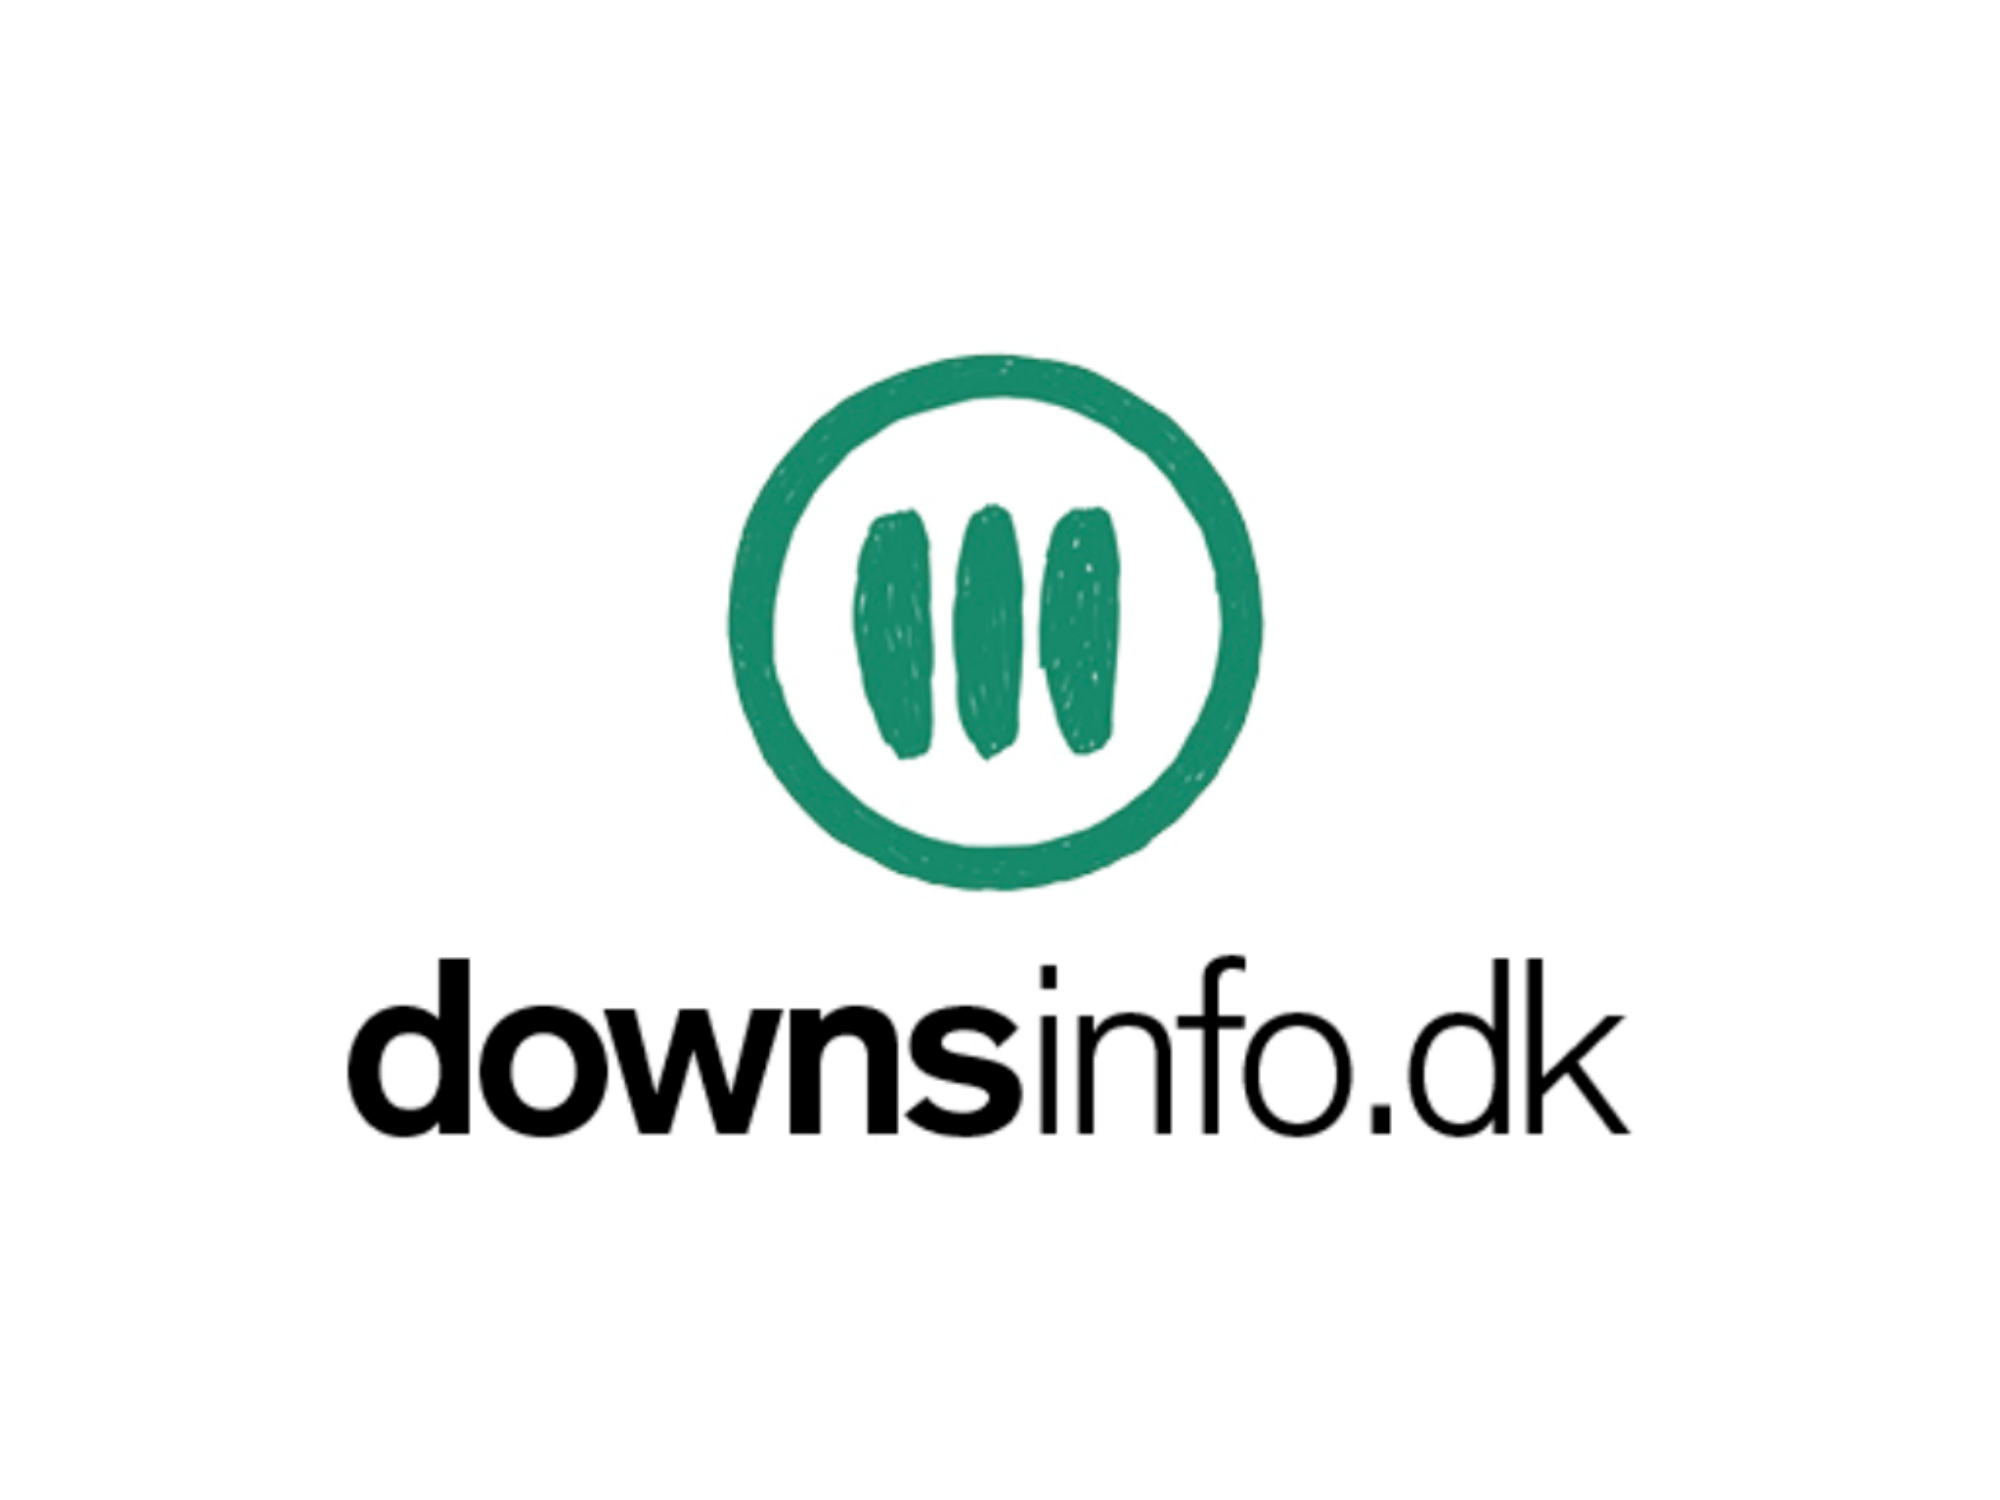 Downsinfo.dk